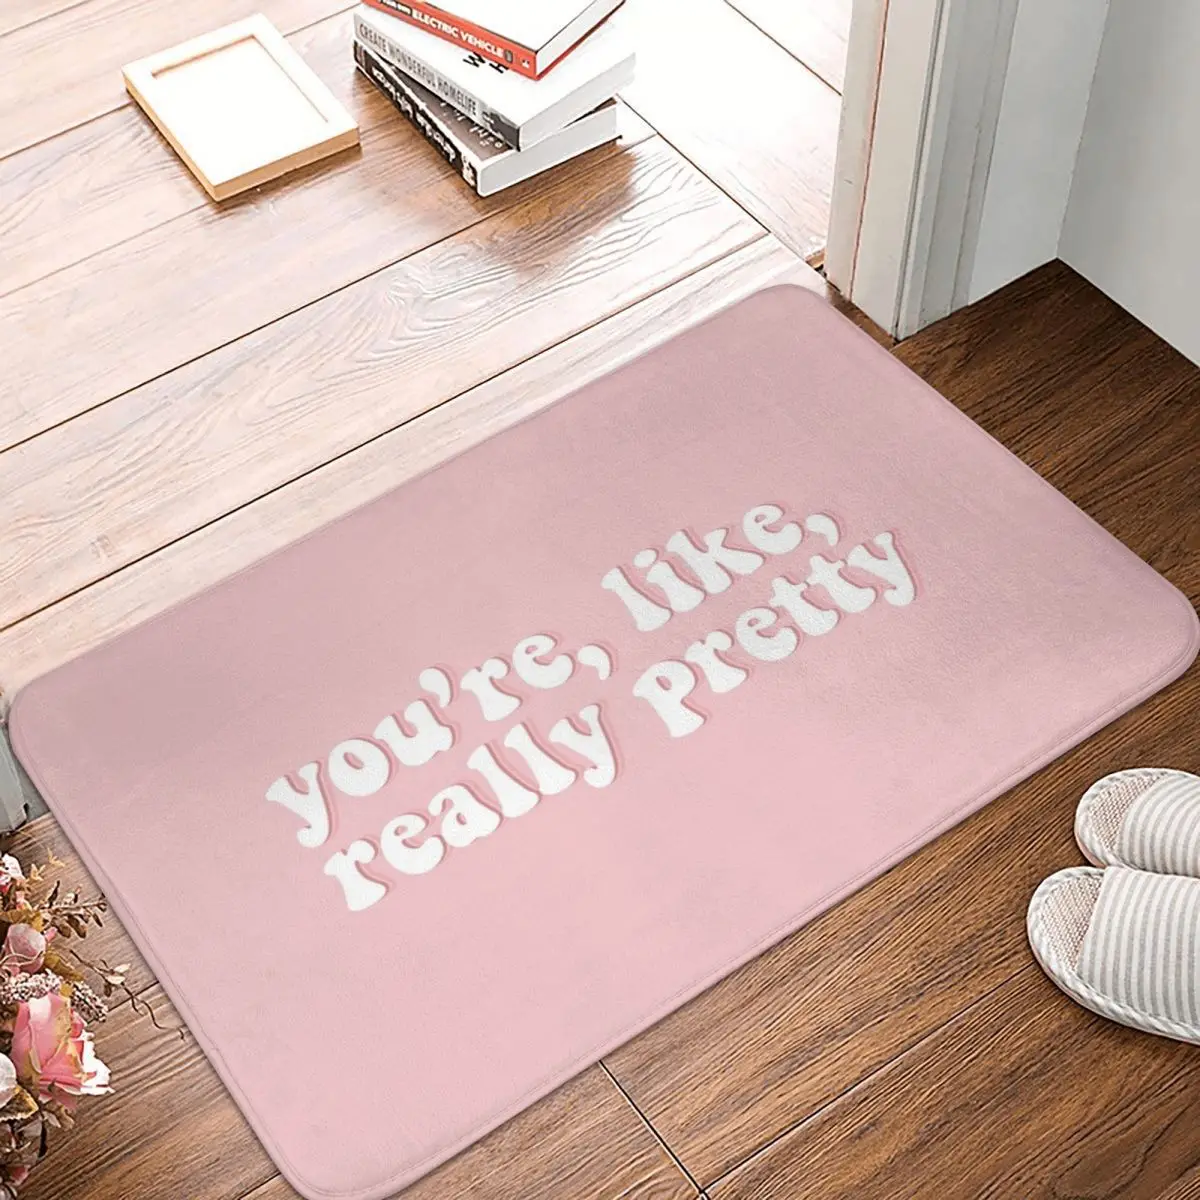 

You're Like Really Pretty Mean Girls Doormat Carpet Mat Rug Polyester Anti-slip Floor Decor Bath Bathroom Kitchen 40x60